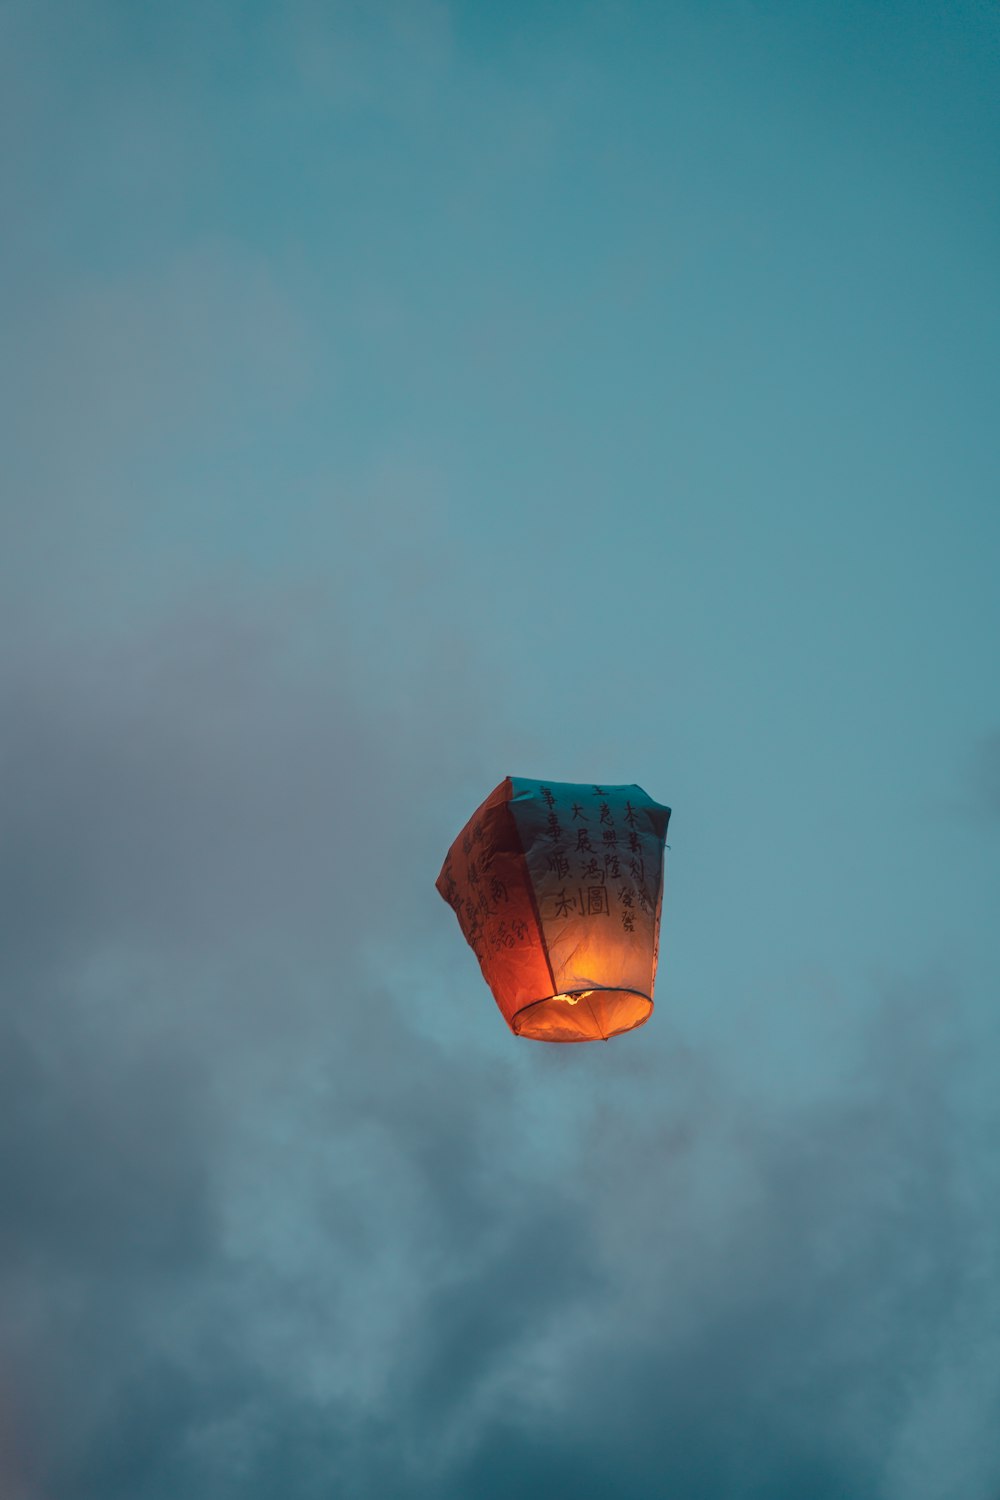 a hot air balloon flying through a cloudy sky